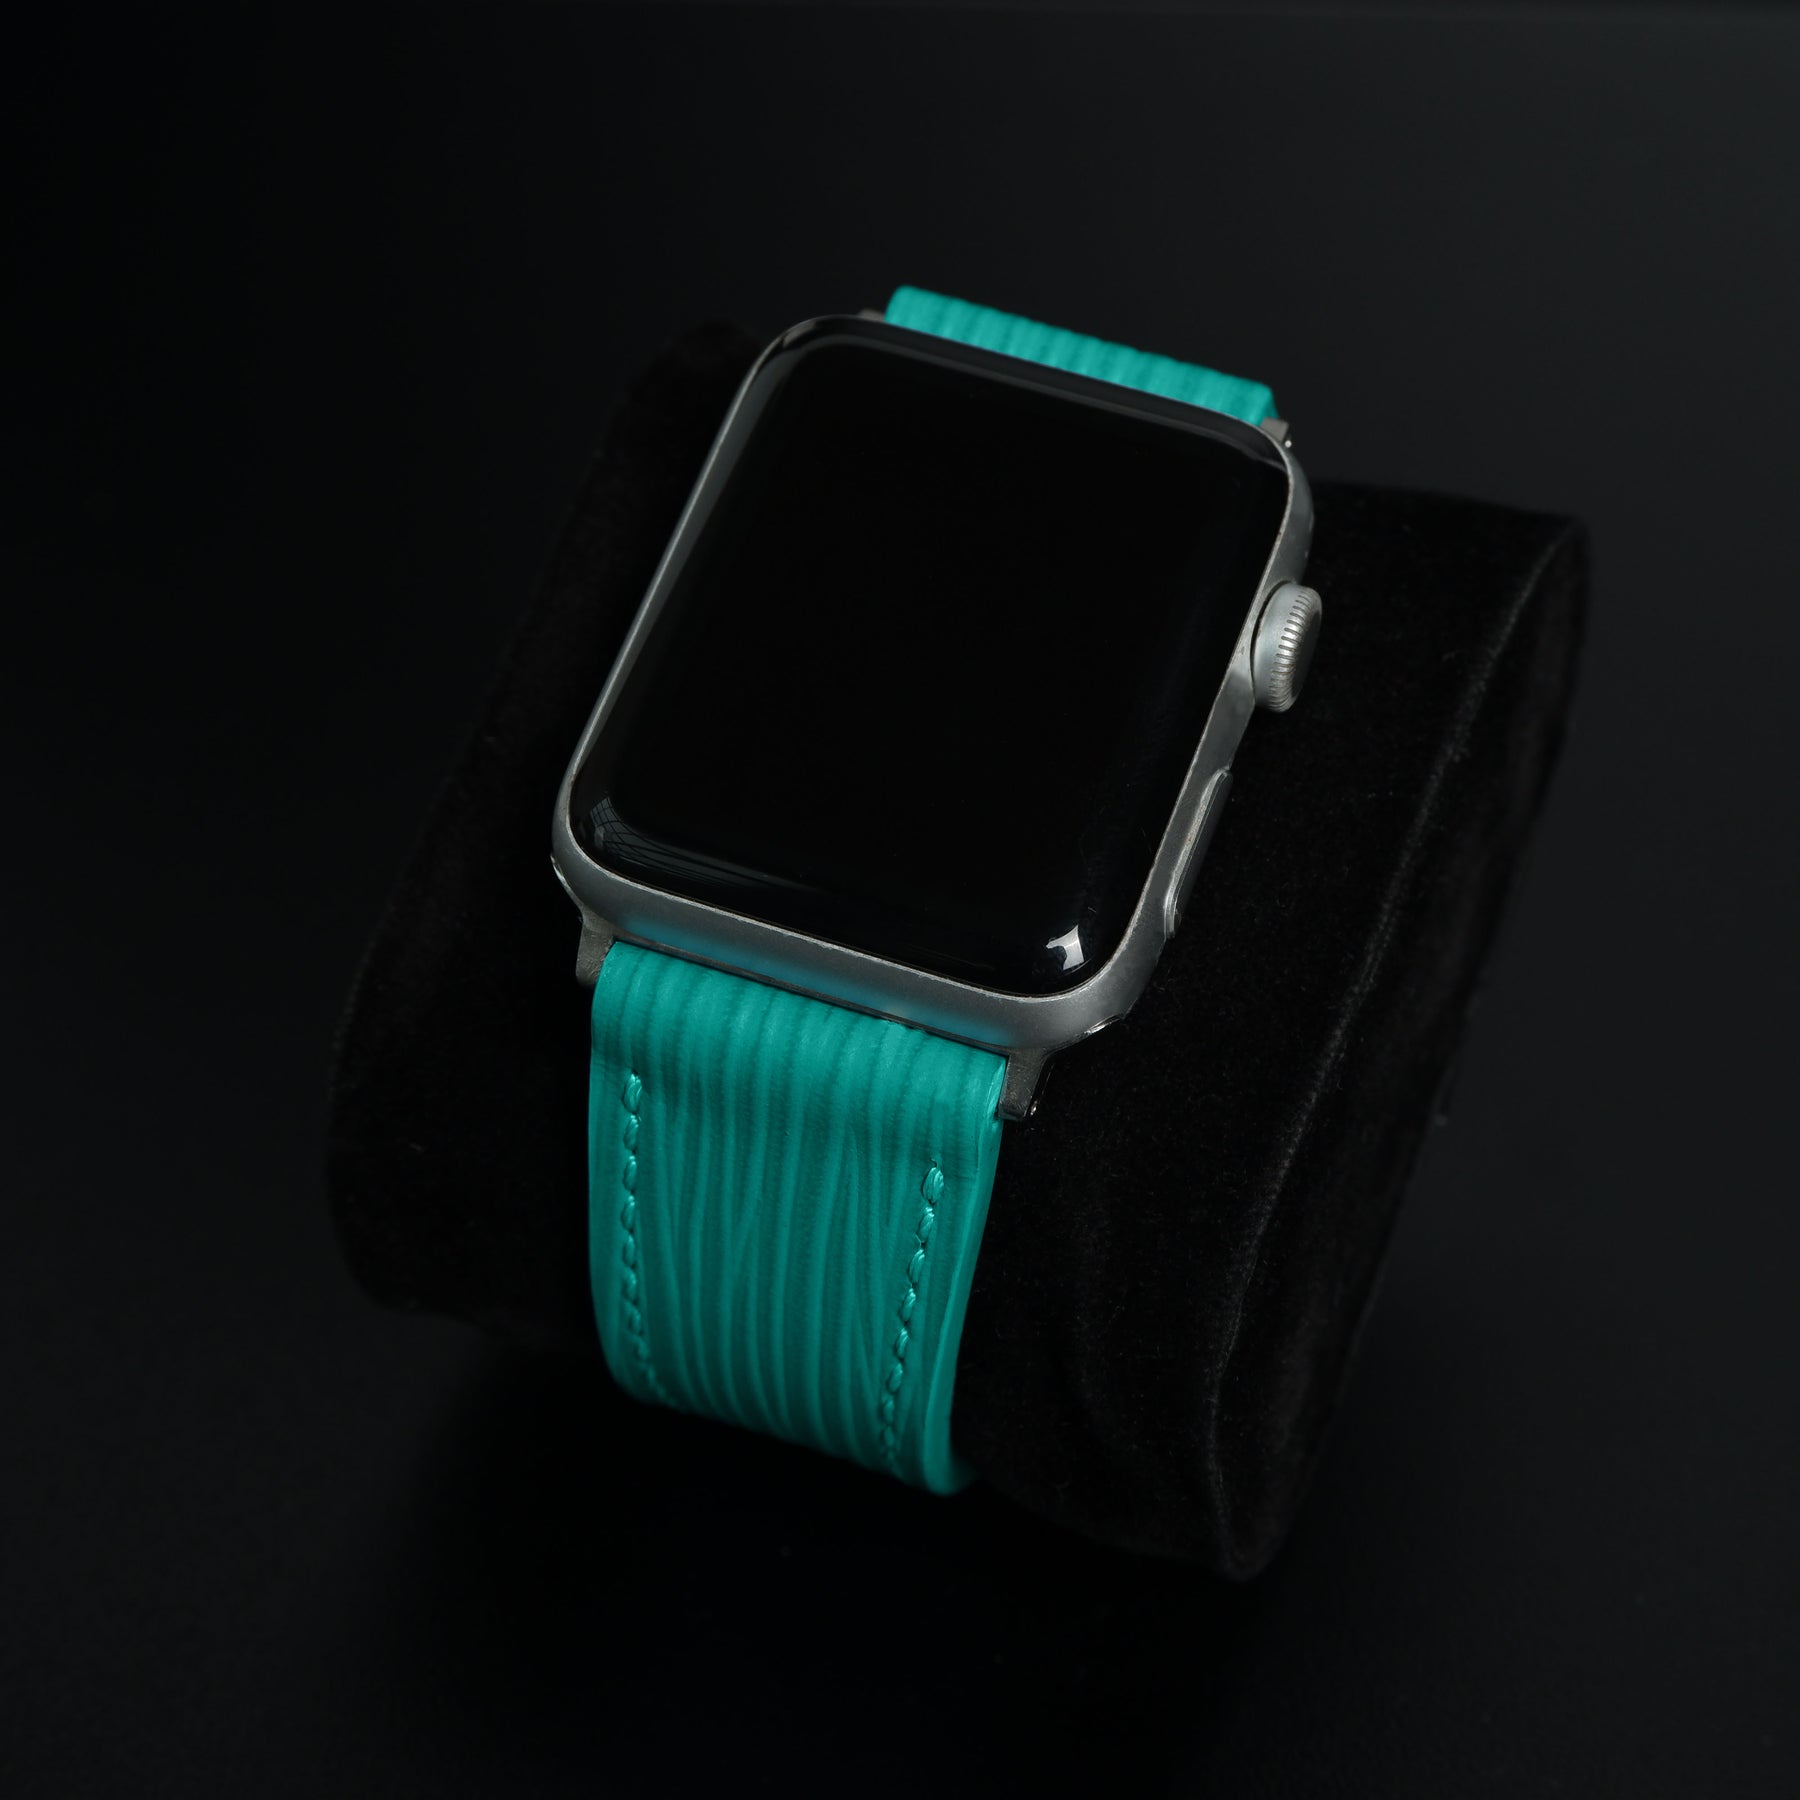 Black EPI Leather Apple Watch Band